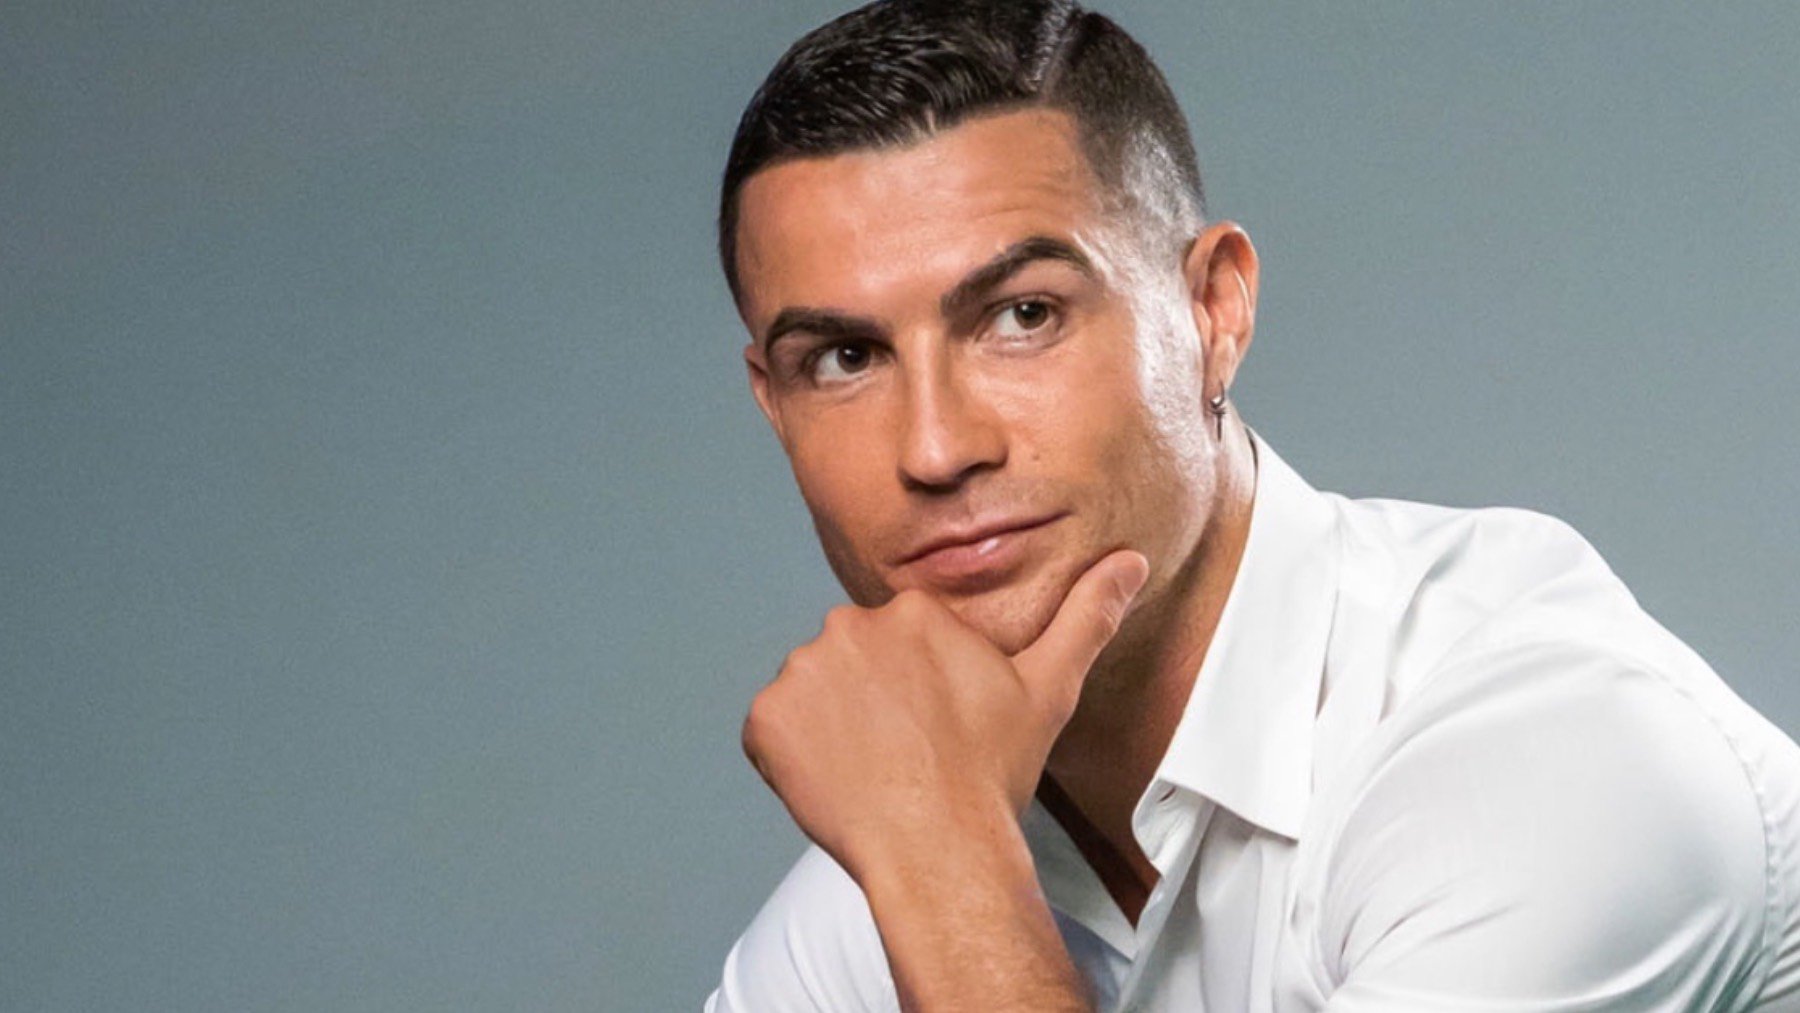 Cristiano Ronaldo vajillas Vista Alegre